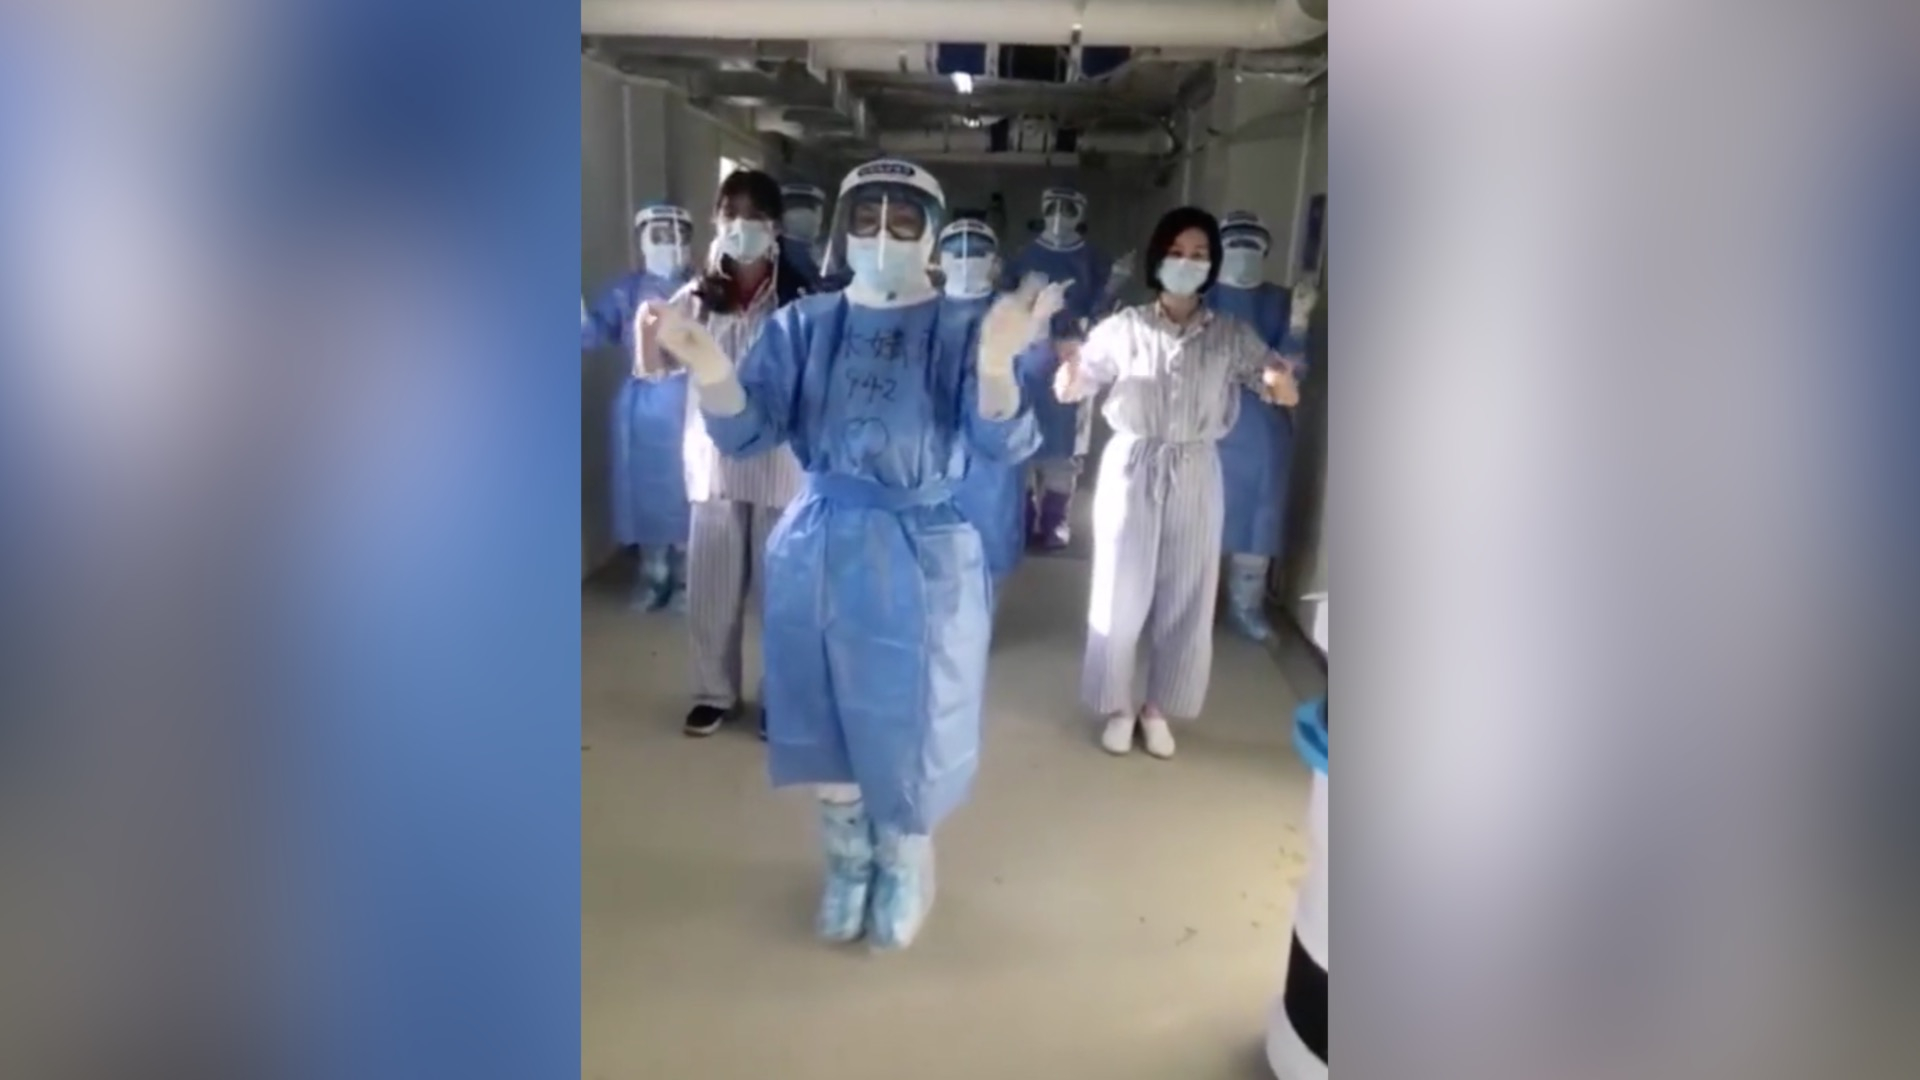 Medics boost patients' morale at Wuhan's Huoshenshan Hospital - CGTN